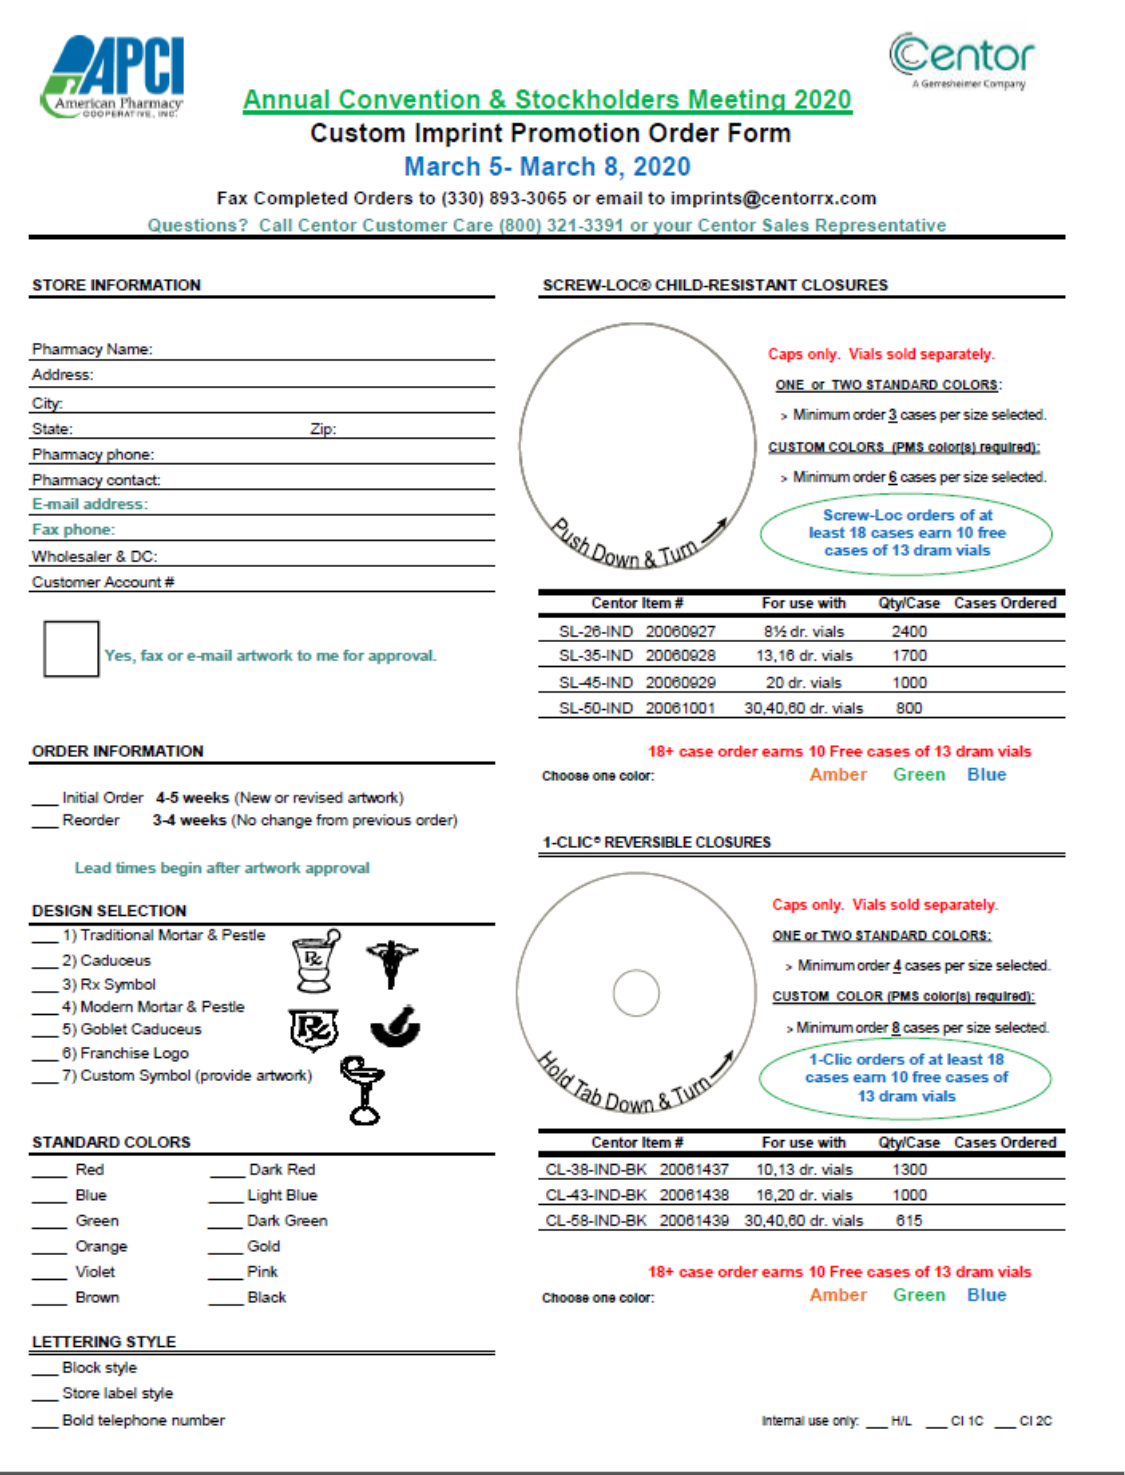 Centor APCI convention special order sheet